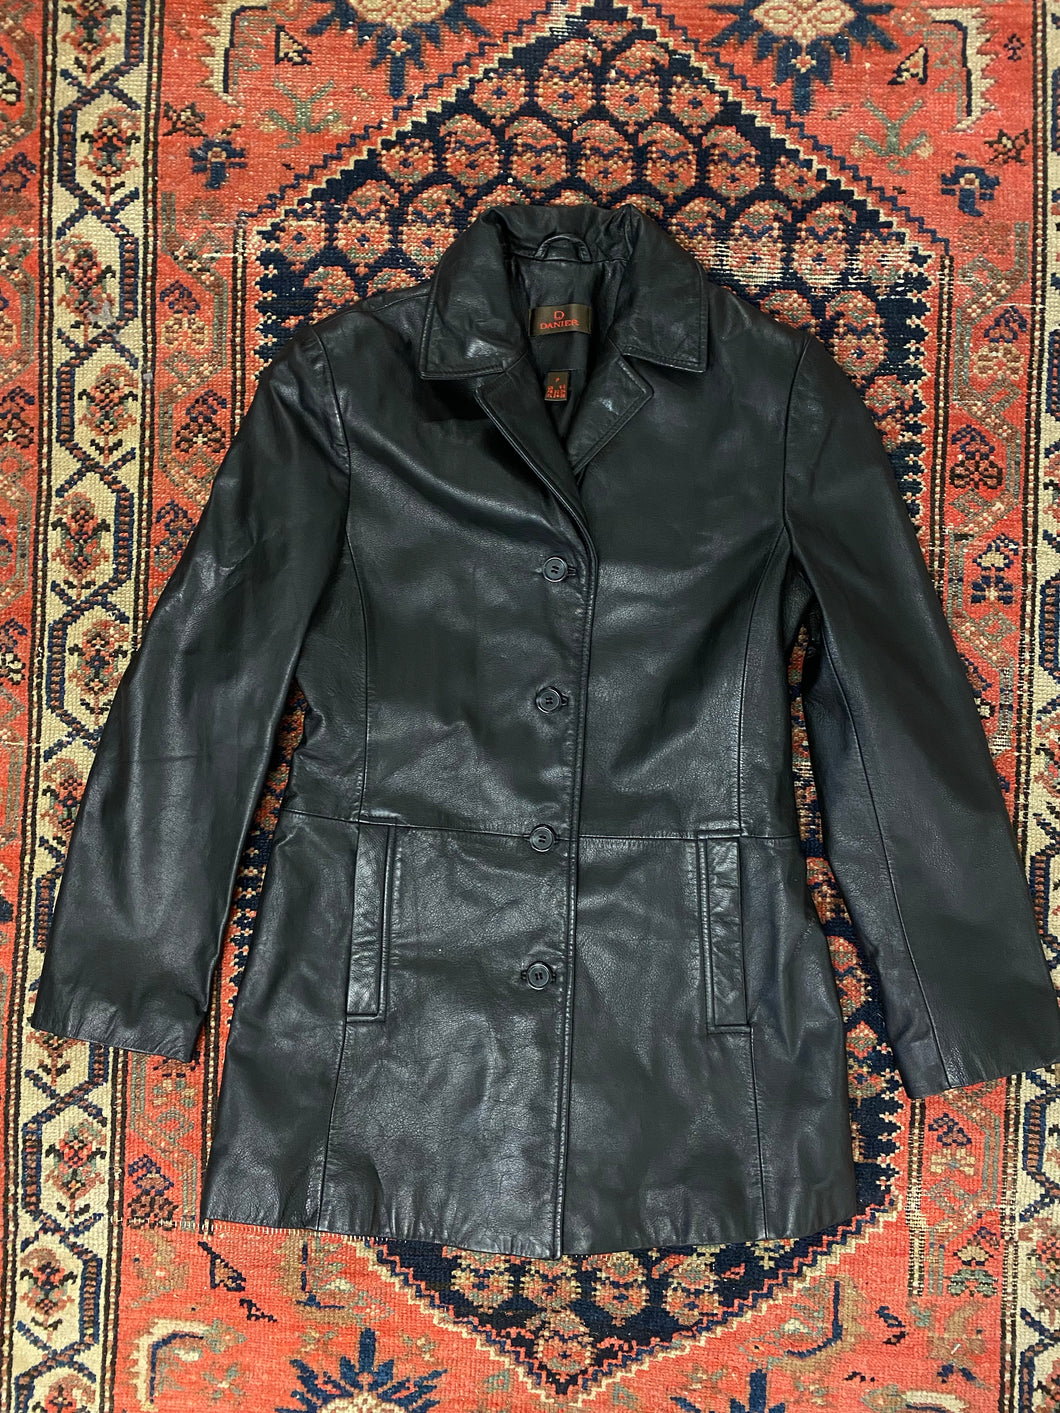 Vintage Long Leather Danier Jacket - S